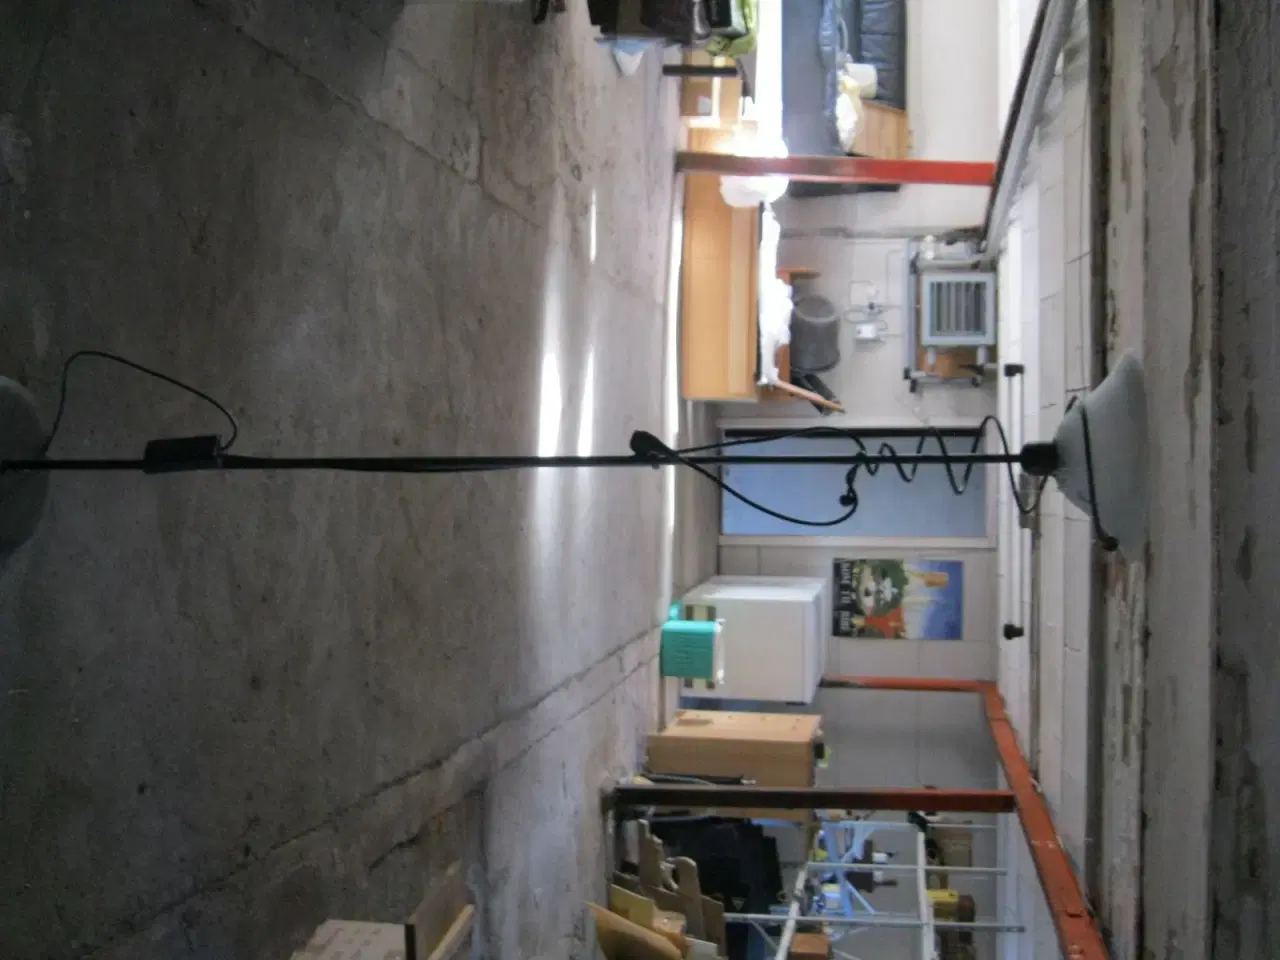 Billede 1 - flot gulv lampe